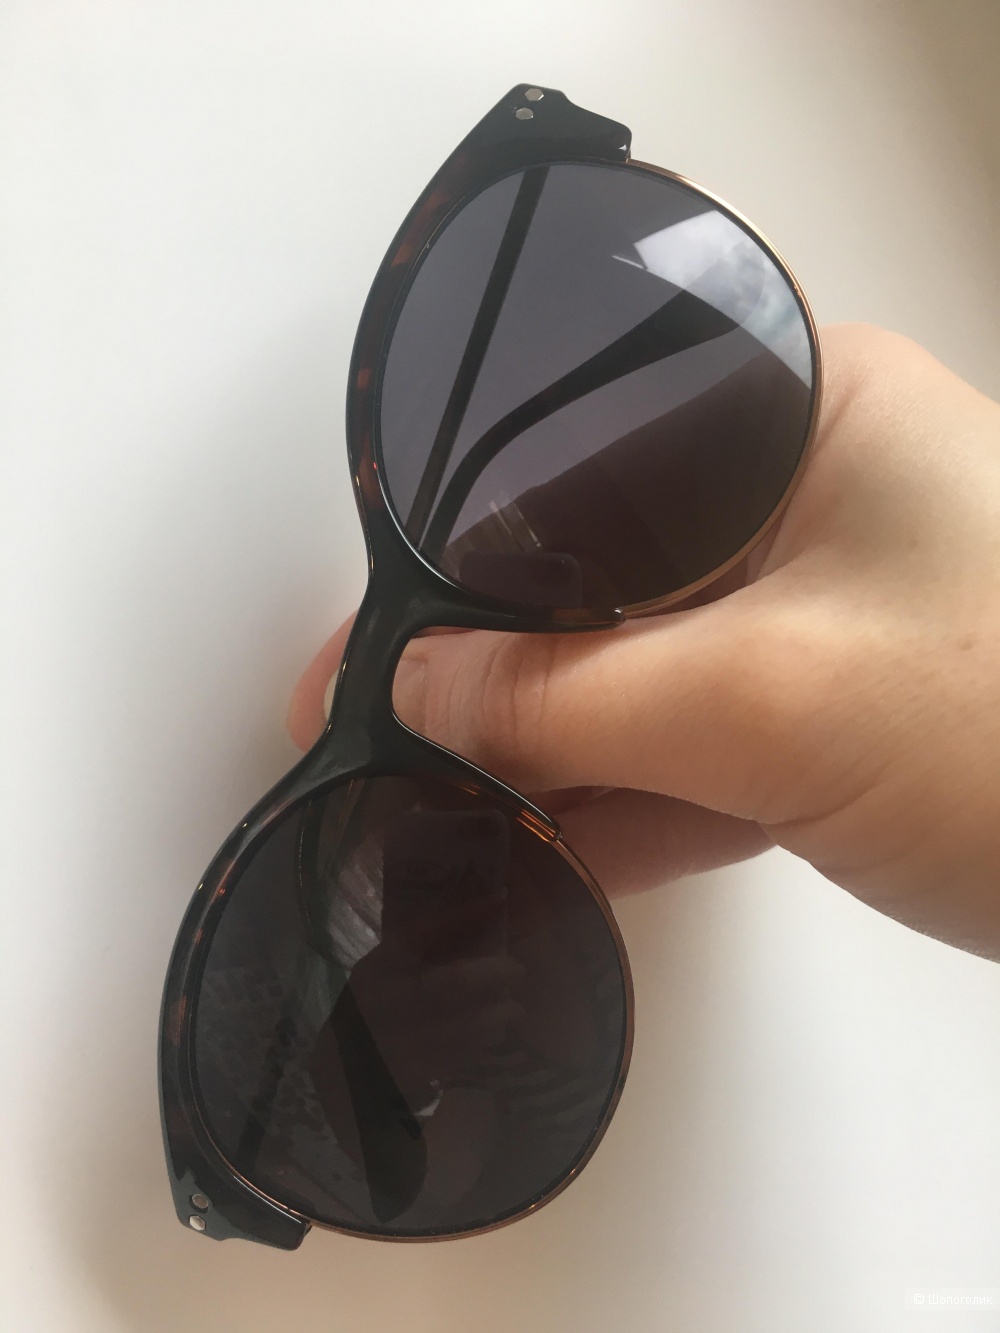 Солнцезащитные очки Missoni